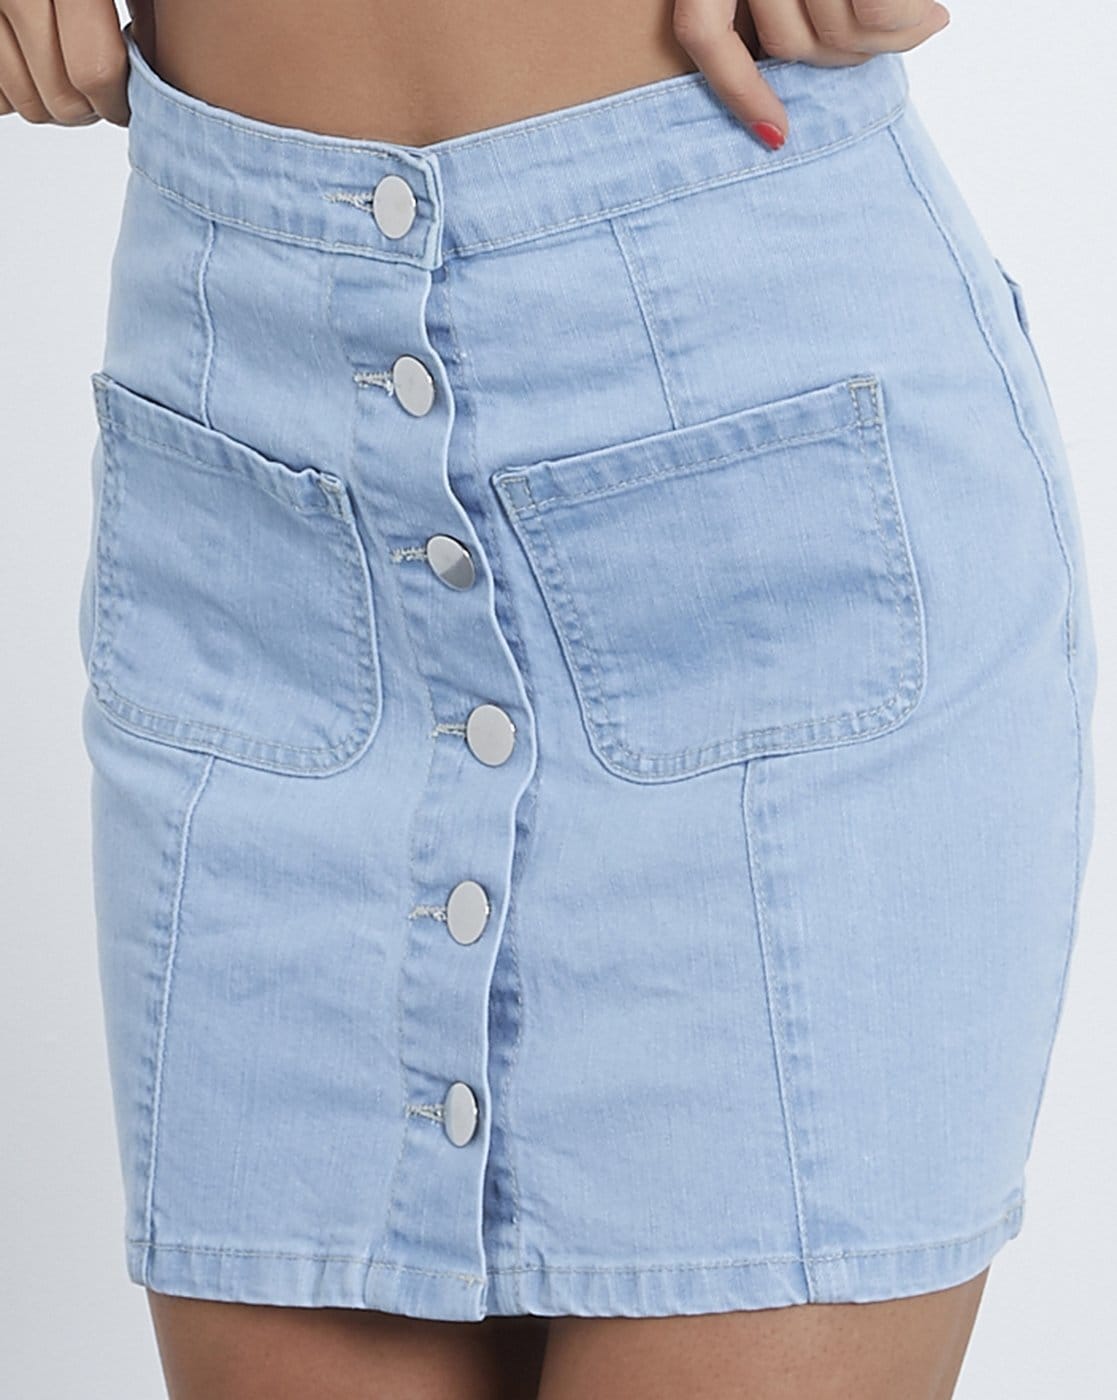 Vintage 90s Button Up Denim Mini Skirt by LVL X – Odd Faery